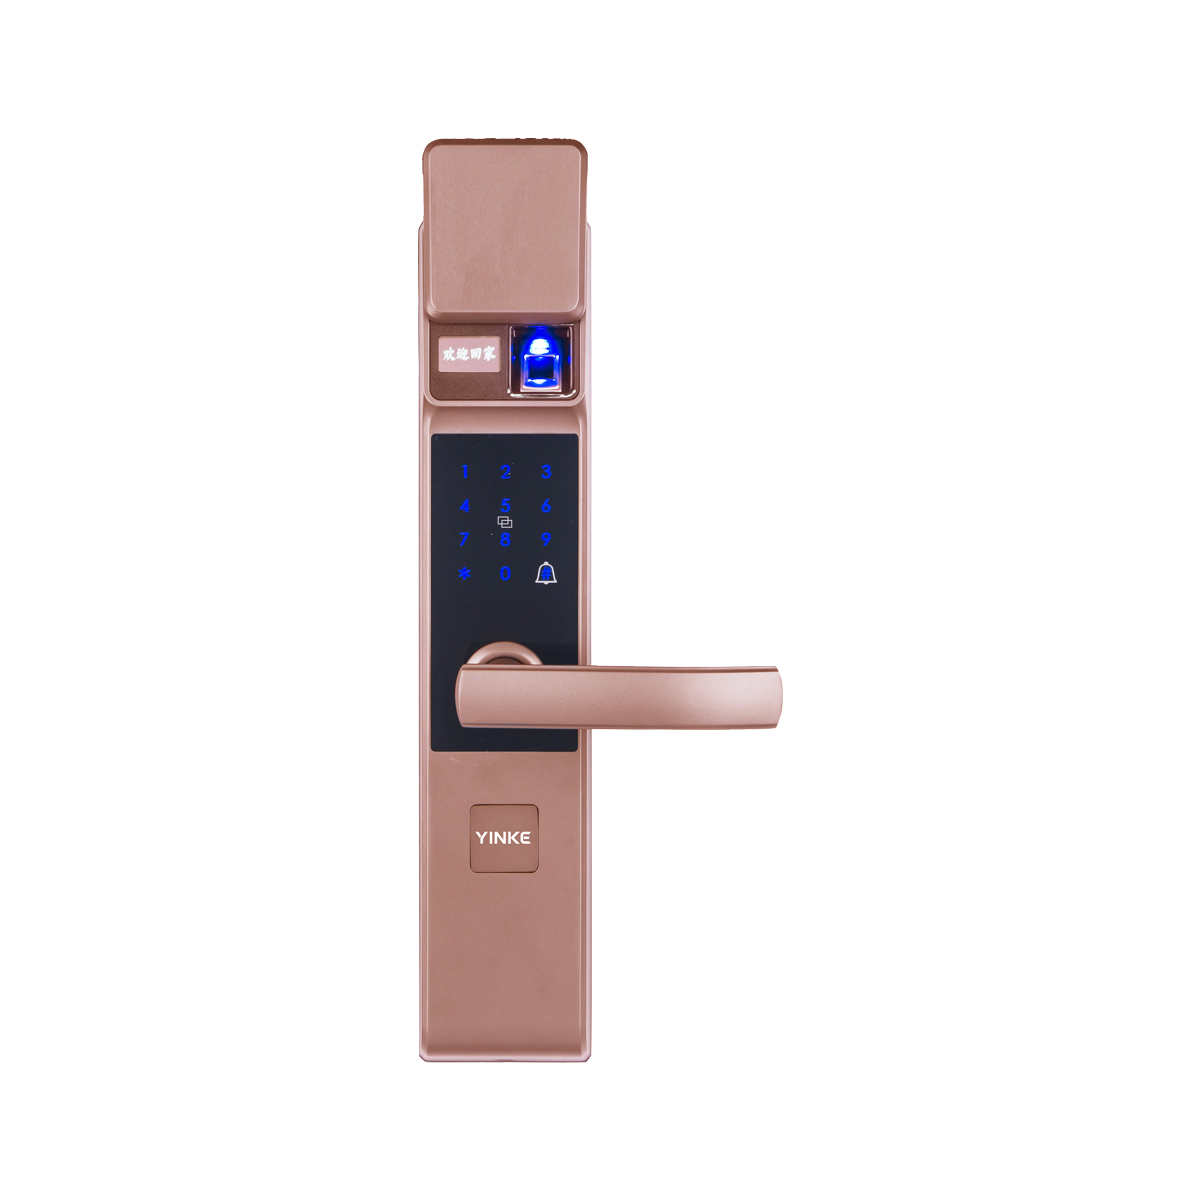 YK15 fingerprint automatic identification smart lock